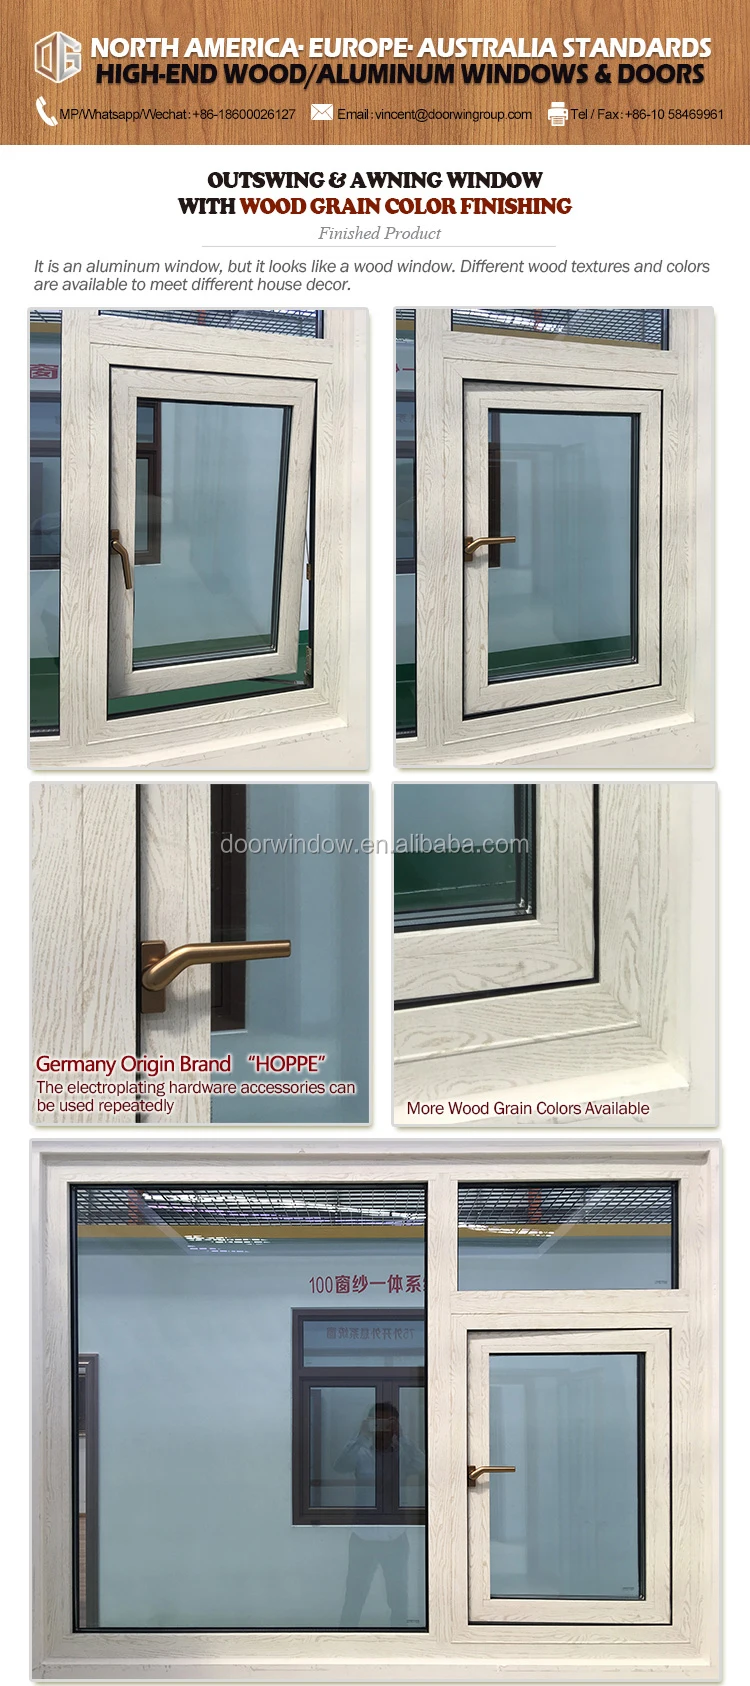 Wood grain color awning window aluminum casement windows